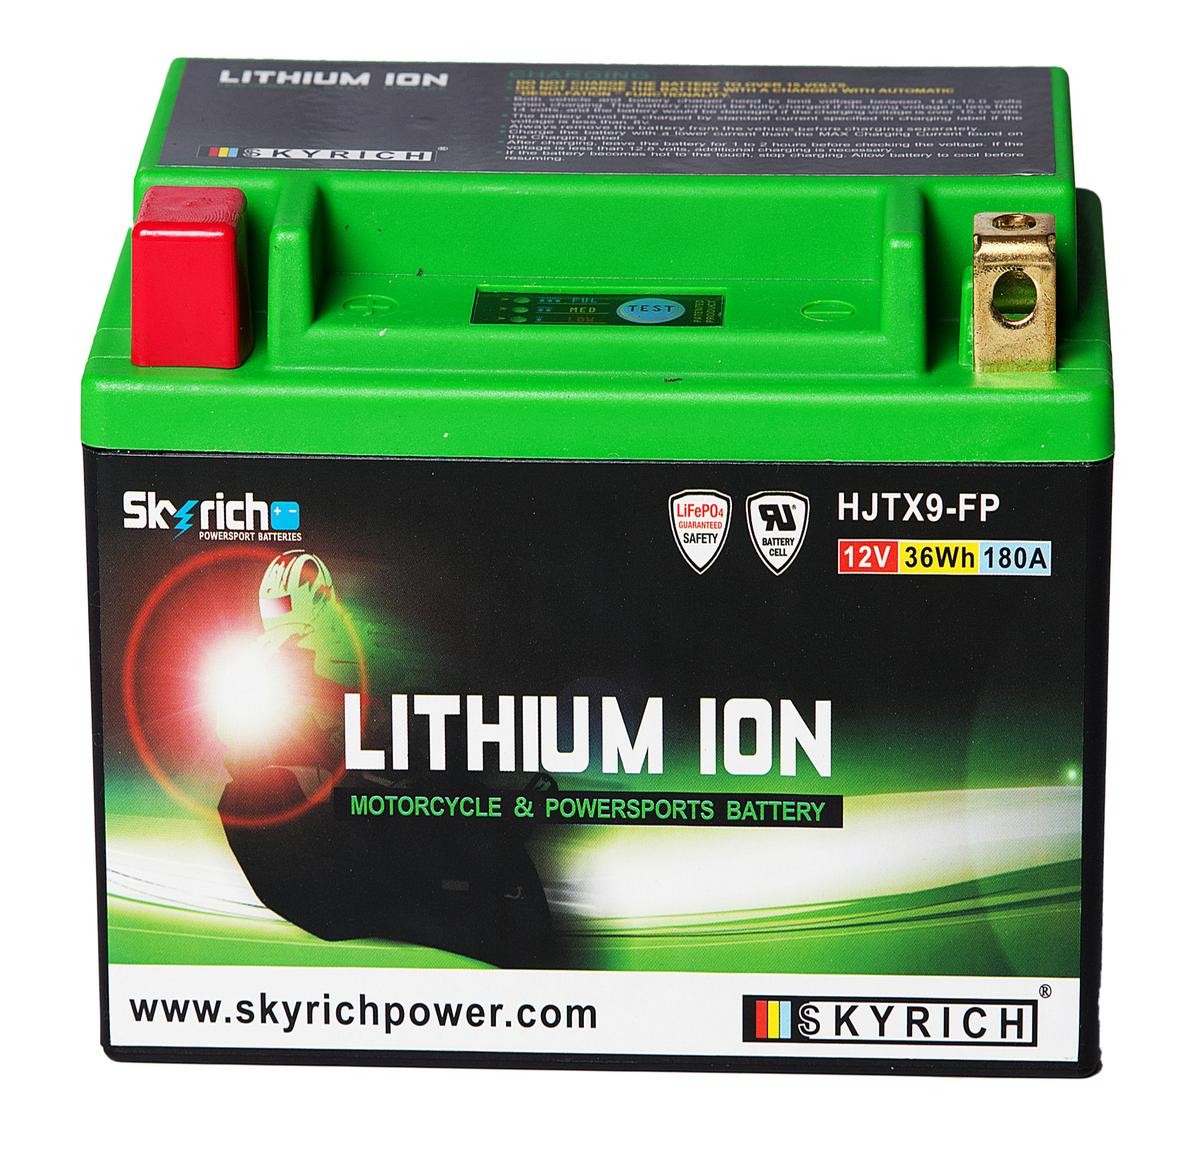 KTM HARD ENDURO Batterie 12V 3Ah 180A N Li-Ionen-Batterie SKYRICH LITHIUM ION HJTX9-FP